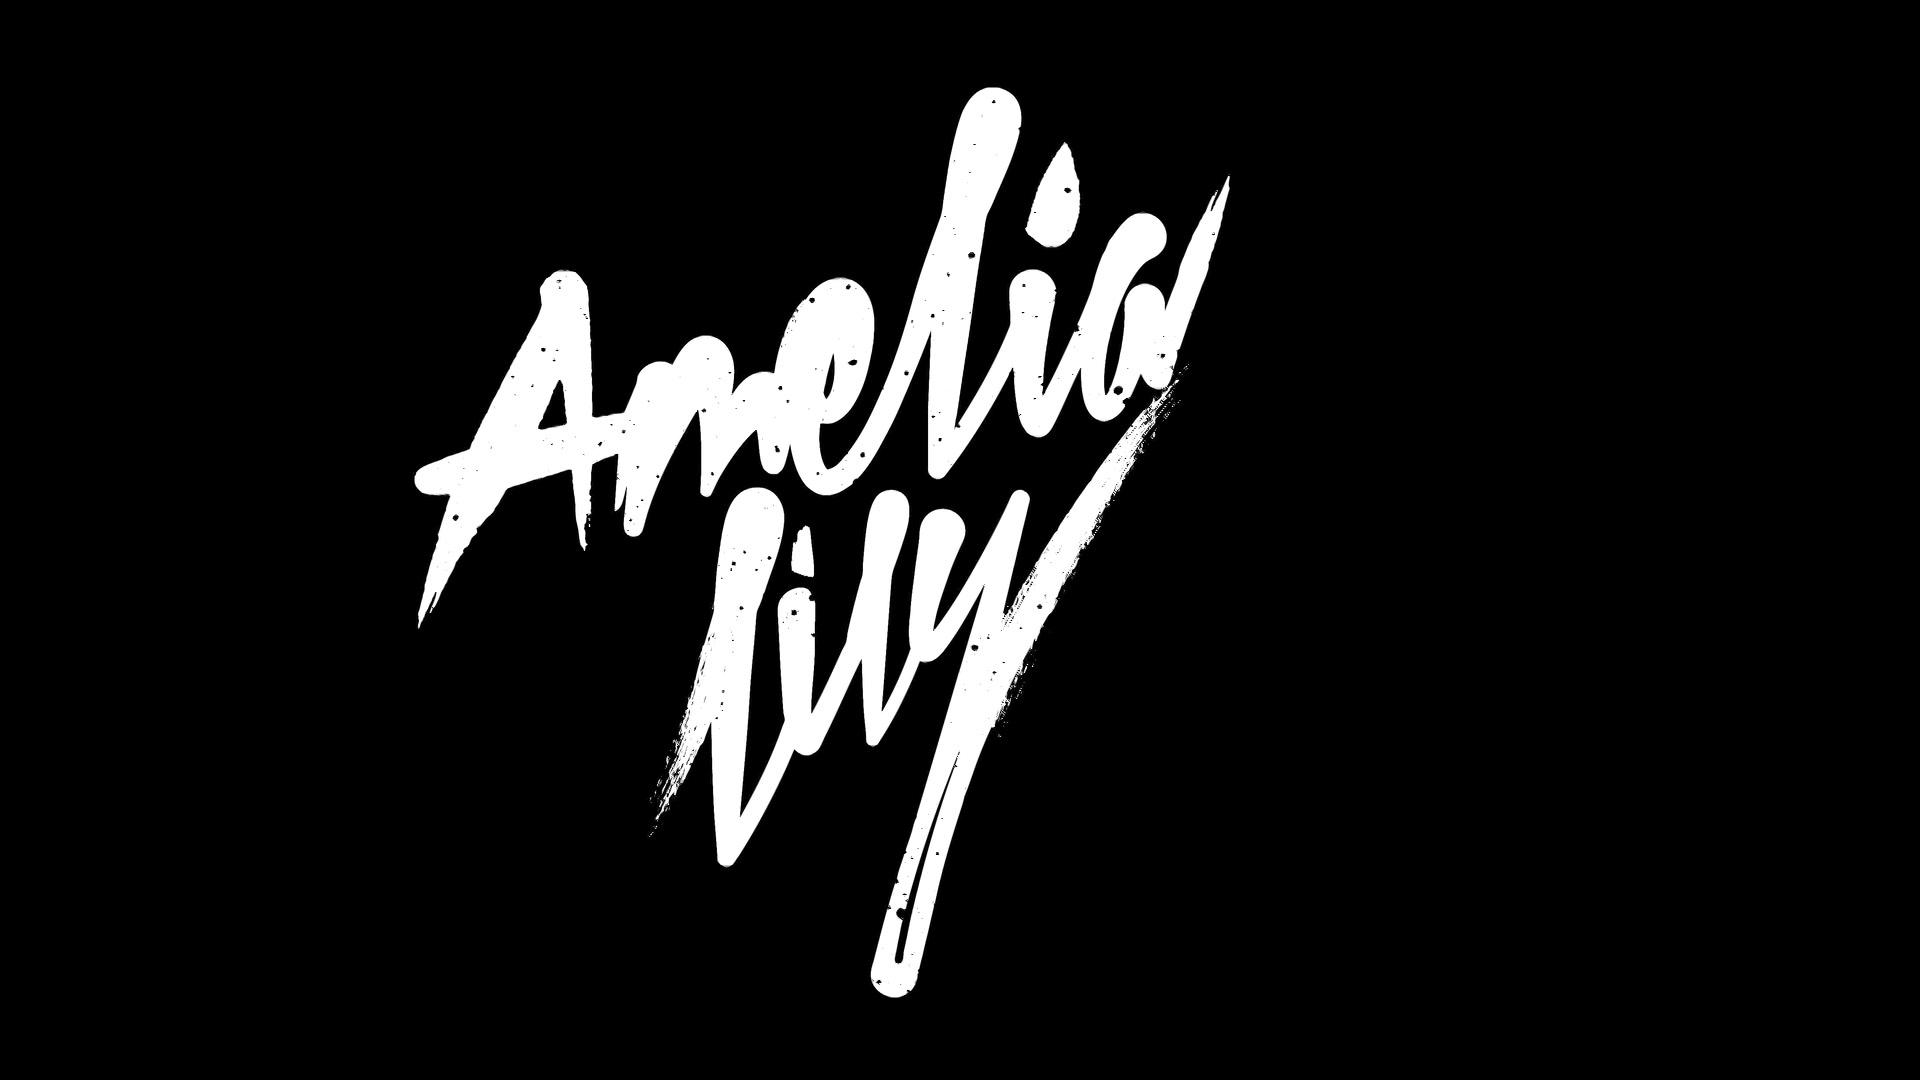 Amelia Lily - You Bring Me Joy (Behind The Scenes)